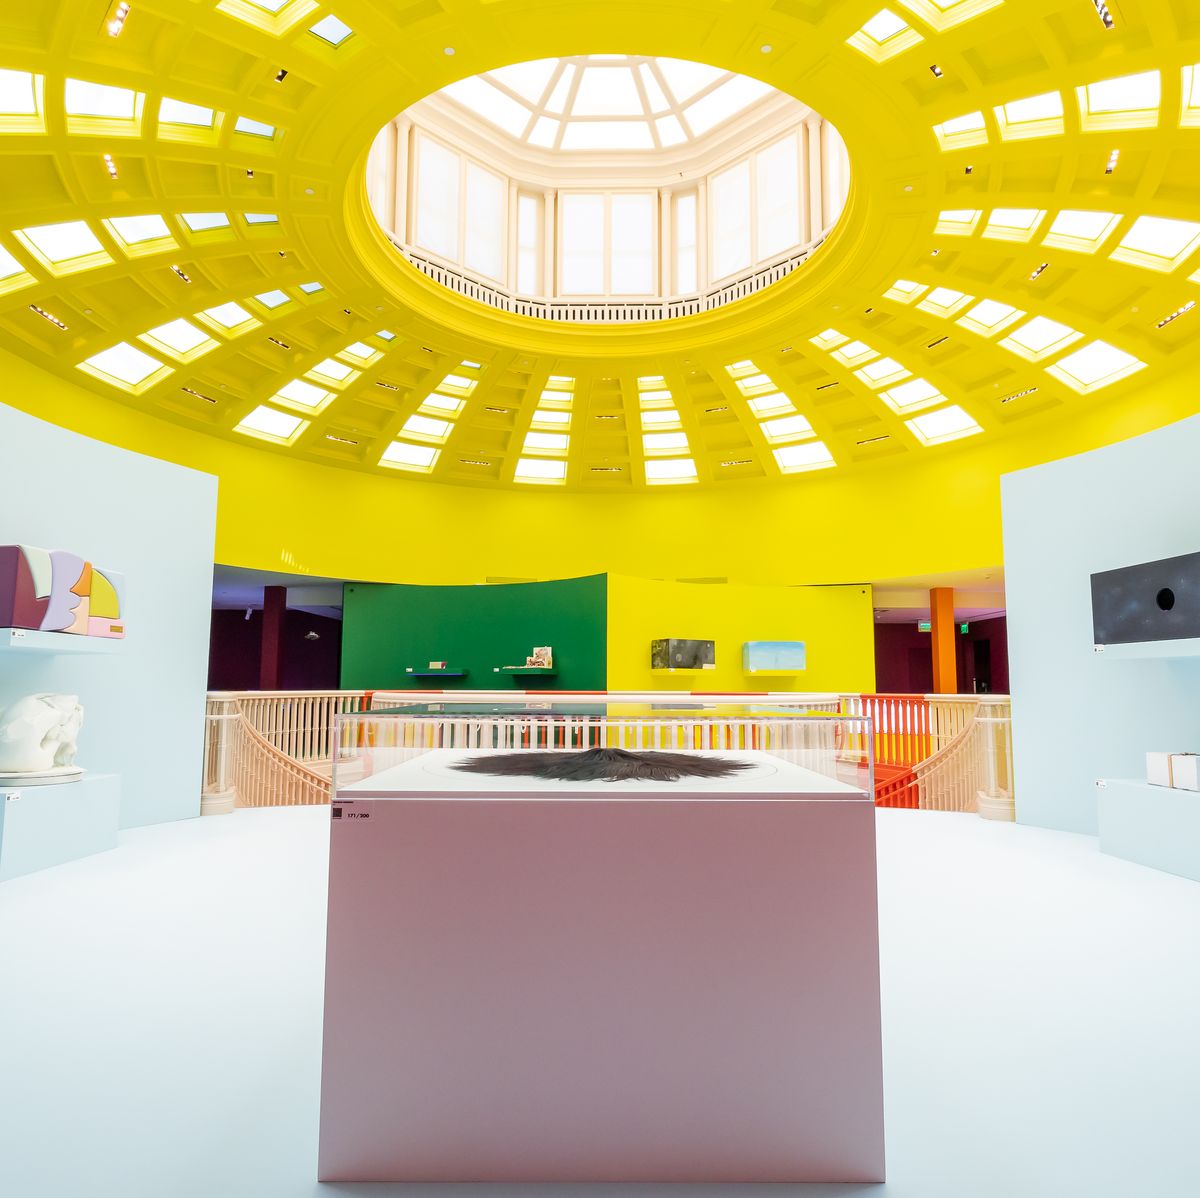 Louis Vuitton's 200 Trunks 200 Visionaries Exhibition in Singapore